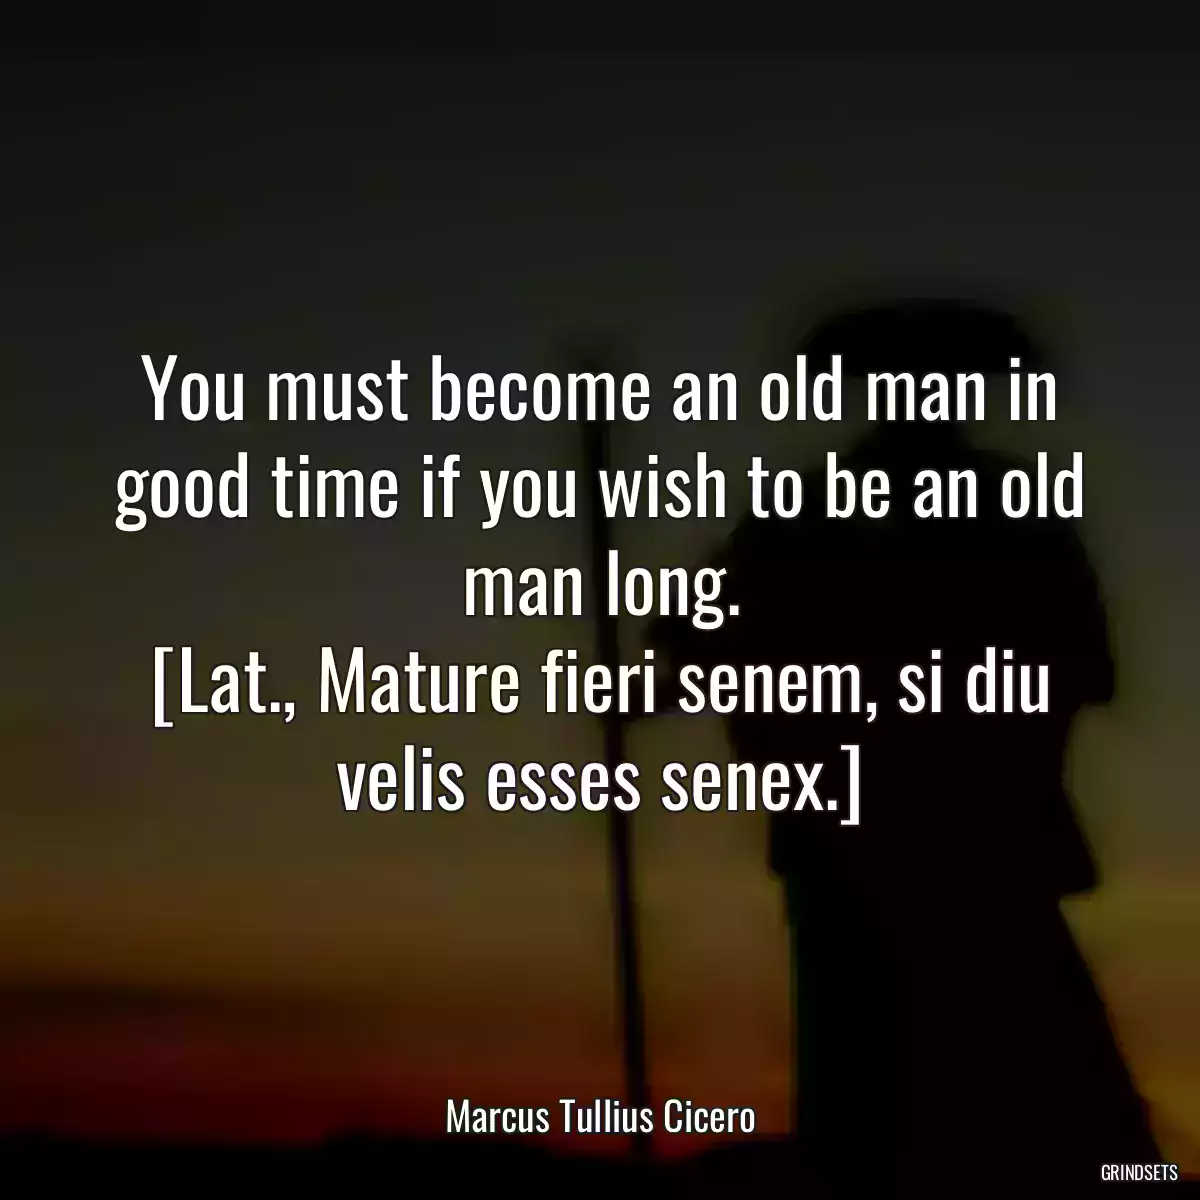 You must become an old man in good time if you wish to be an old man long.
[Lat., Mature fieri senem, si diu velis esses senex.]